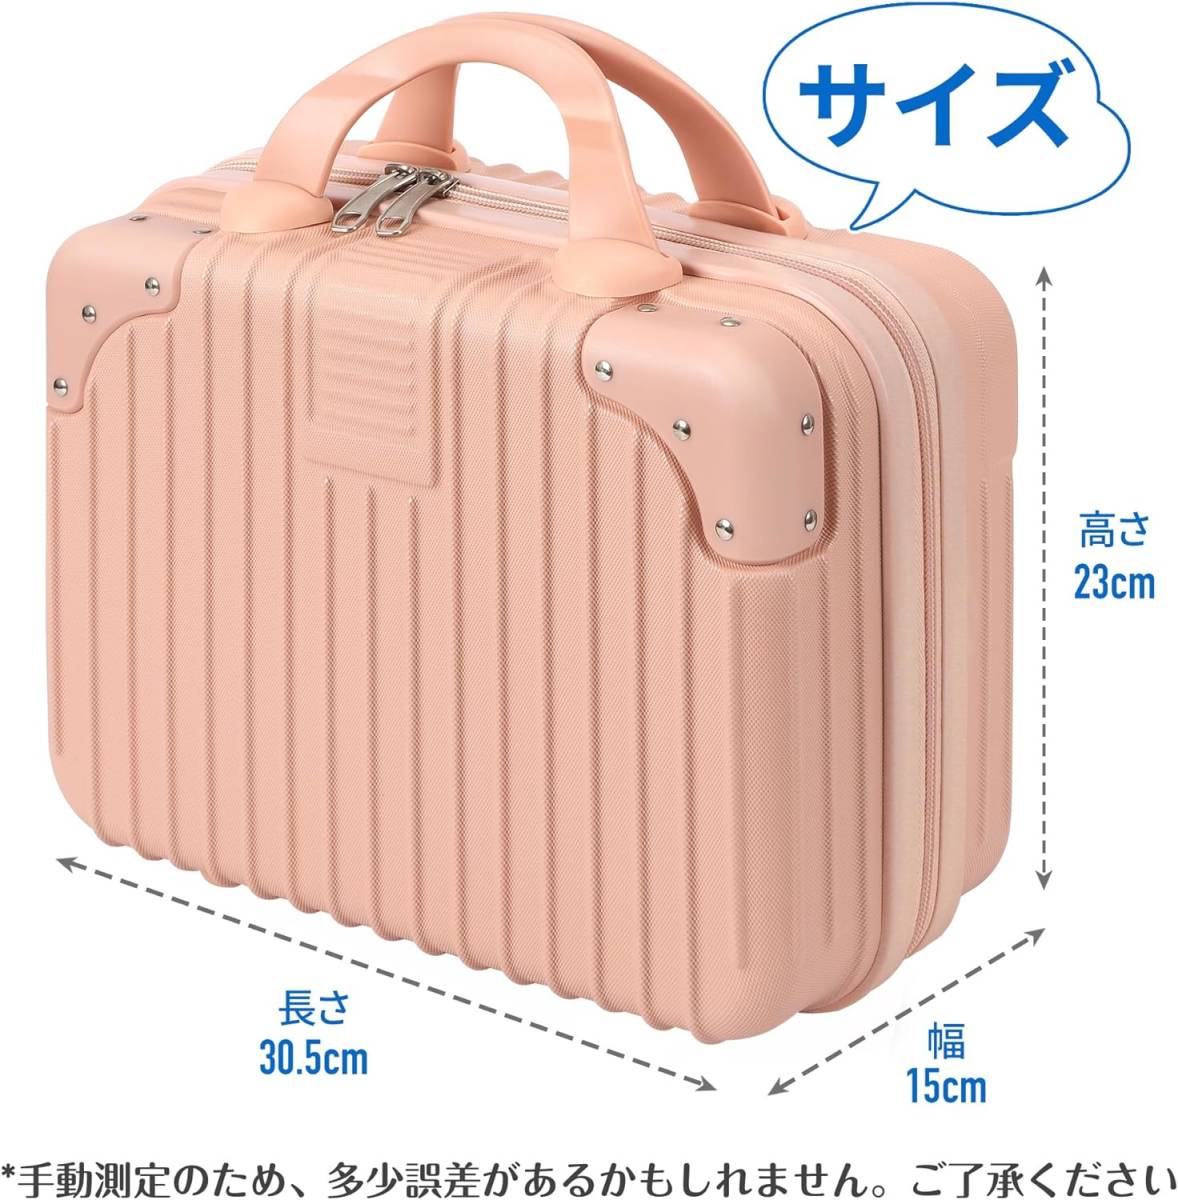 [TRIPJOYY] ミニスーツケース 化粧箱 スーツケース ハンドバッグ 機内持込 携帯 小格納 超軽量 耐久性 防水 旅行 (ピンク 30.5×23×15cm)_画像6